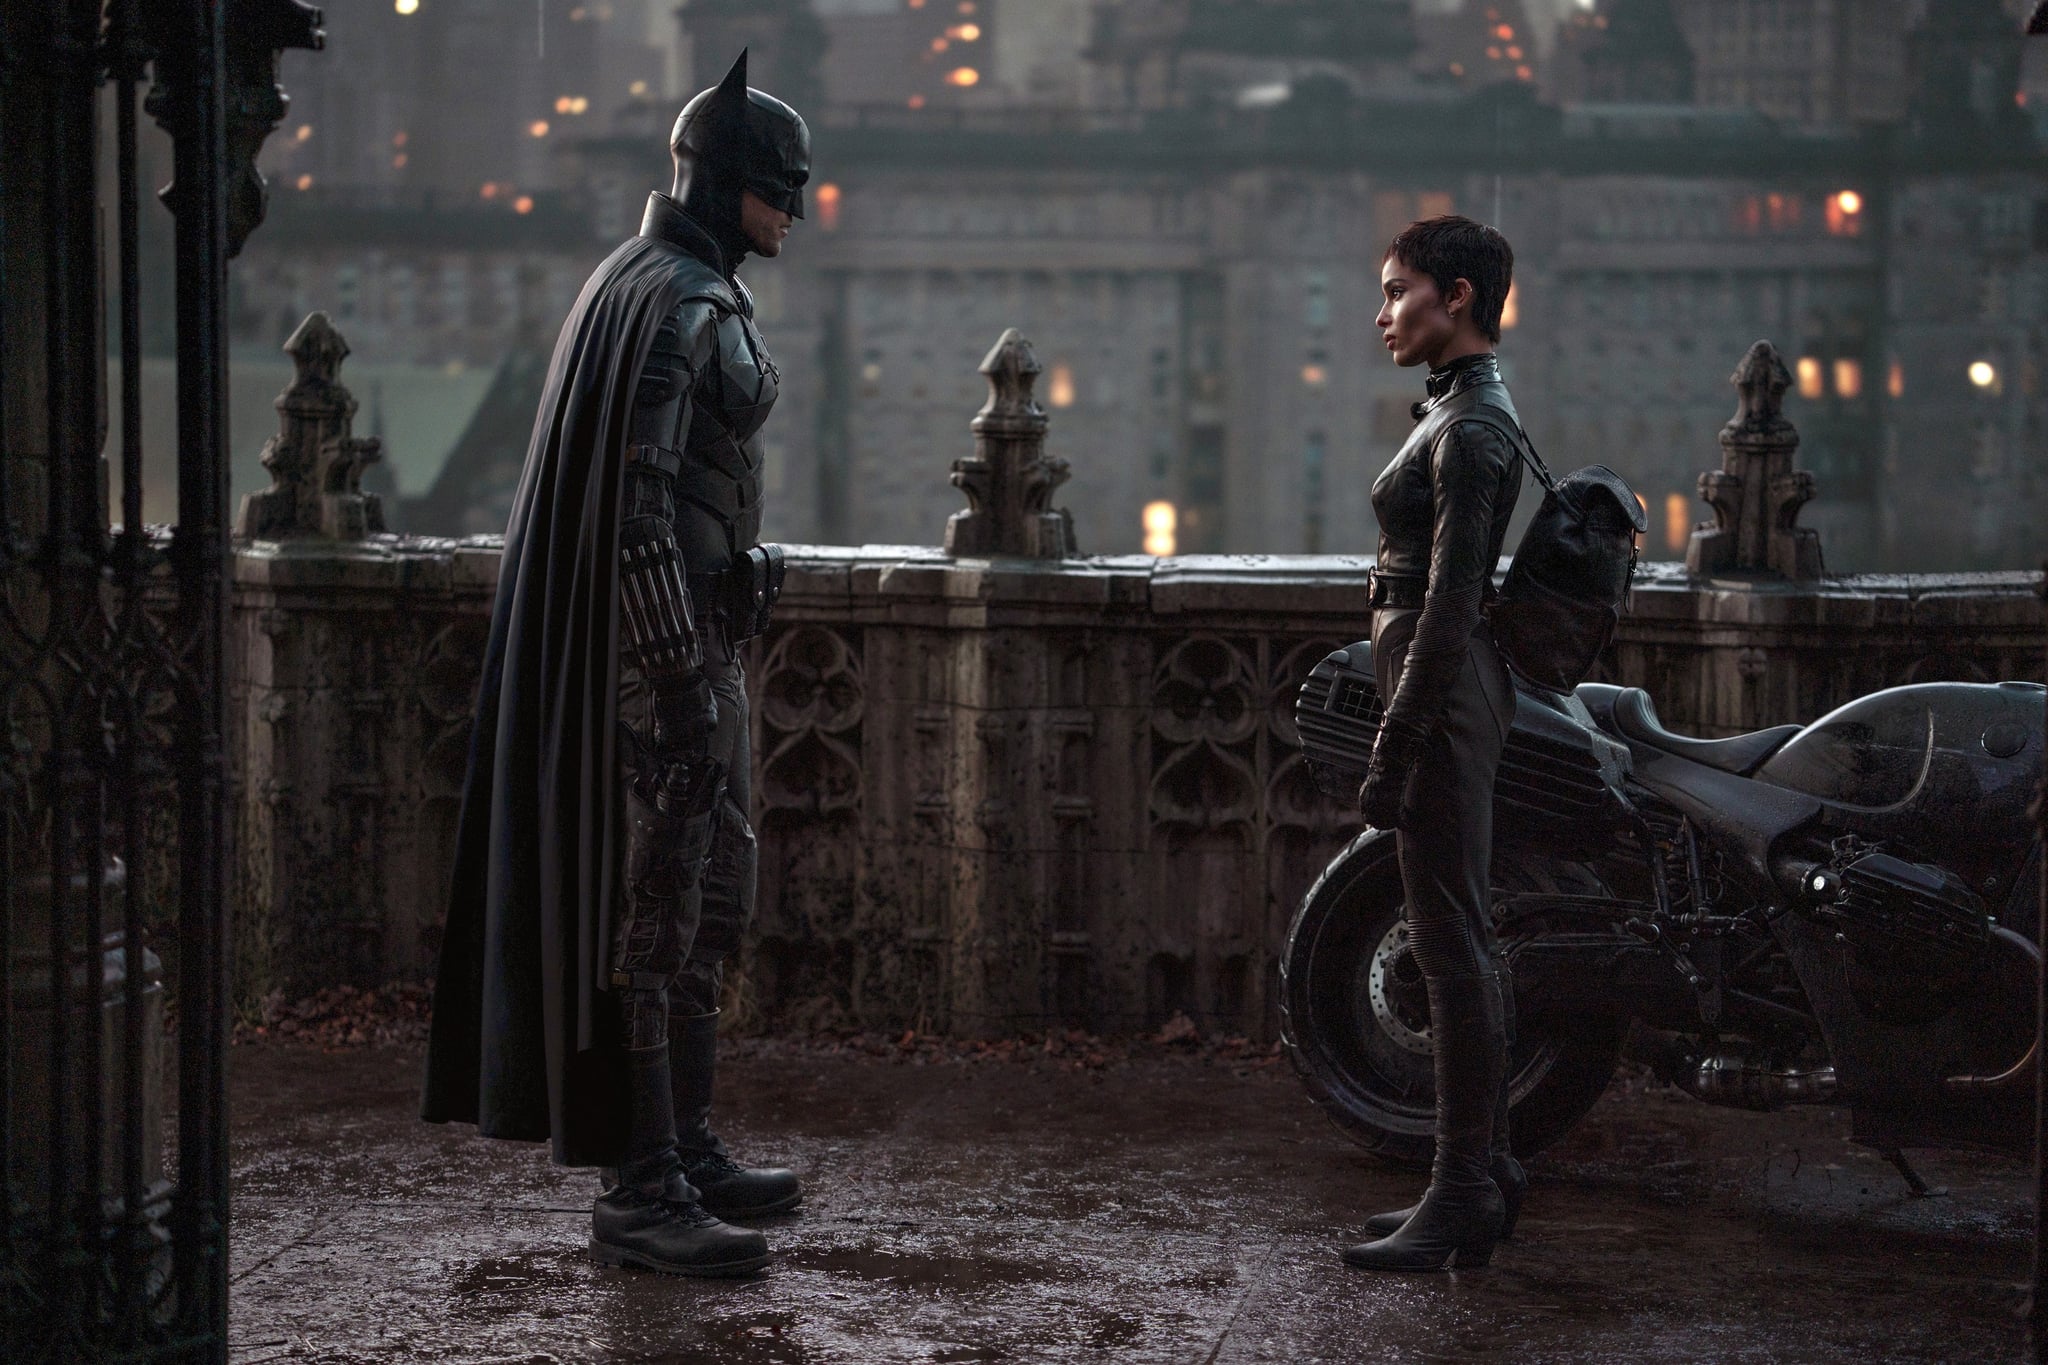 THE BATMAN, from left: Robert Pattinson as Batman, Zoe Kravitz as Catwoman, 2022. ph: Jonathan Olley / Warner Bros. / Courtesy Everett Collection